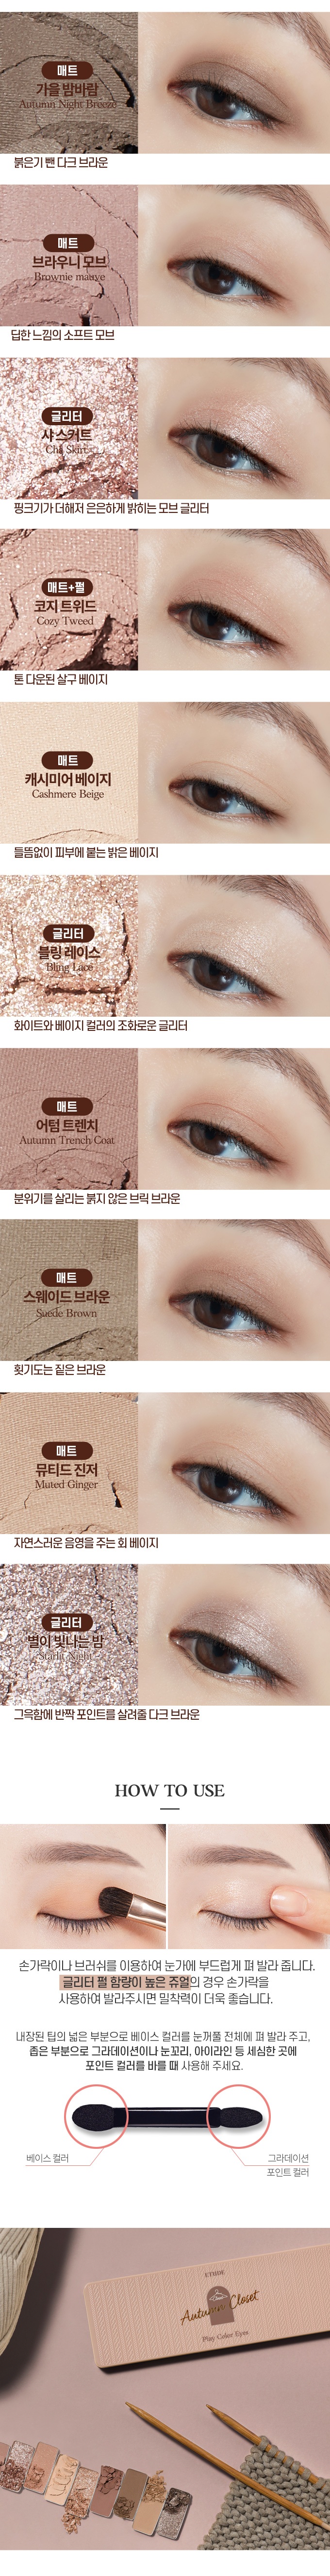 Etude House Play Color Eyes Autumn Closet korean skincare product online shop malaysia China taiwan2